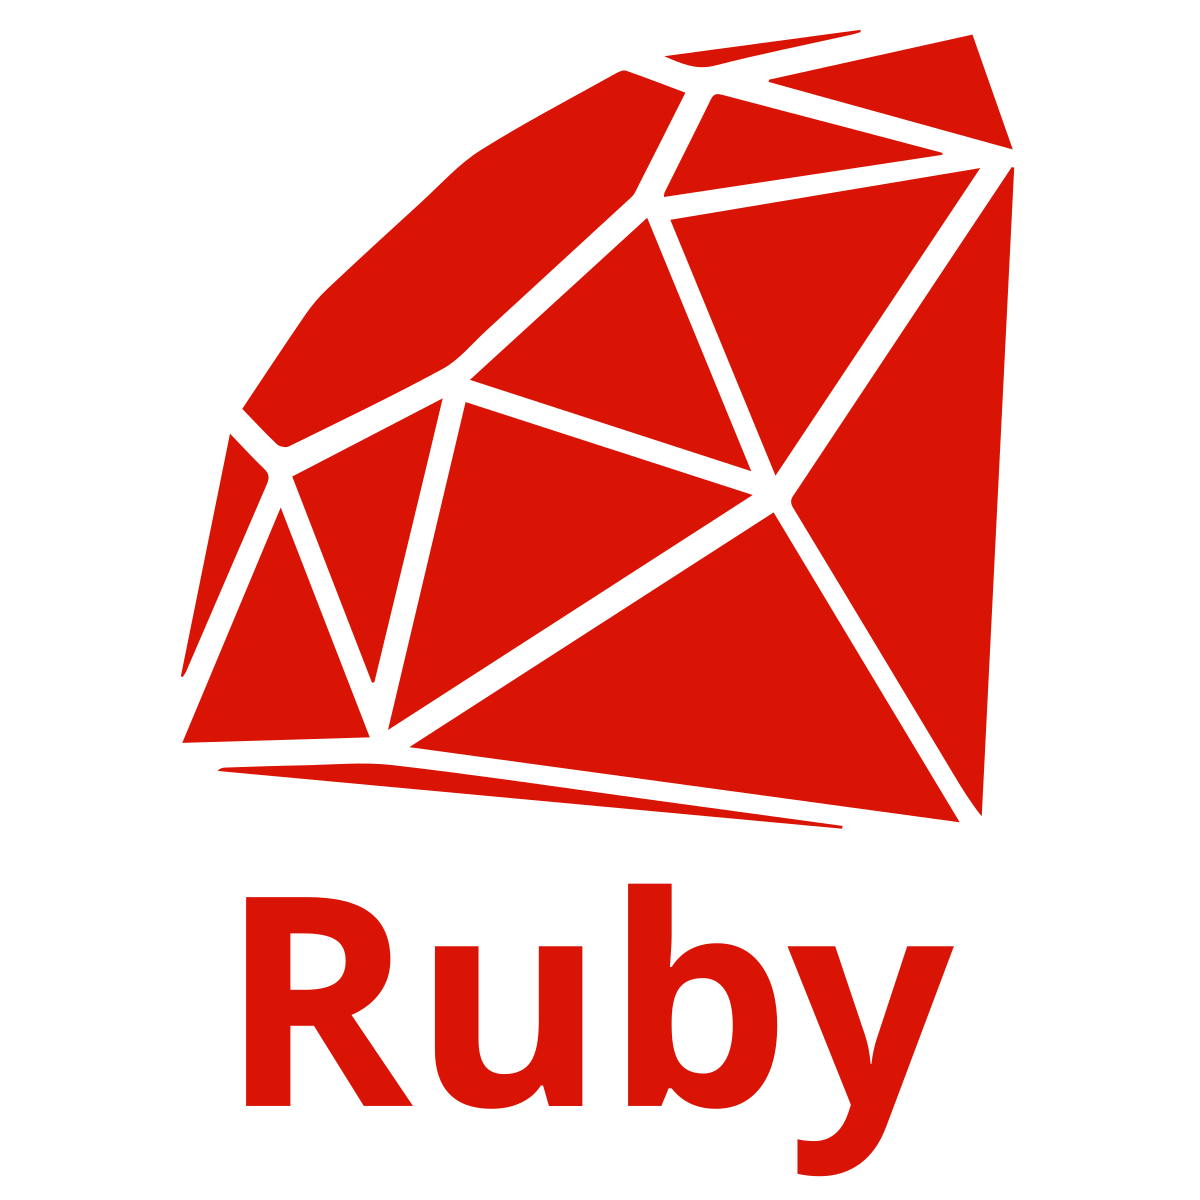 Ruby. Иконка Ruby. Рубин язык программирования. Иконка Ruby язык программирования. Руби программирование